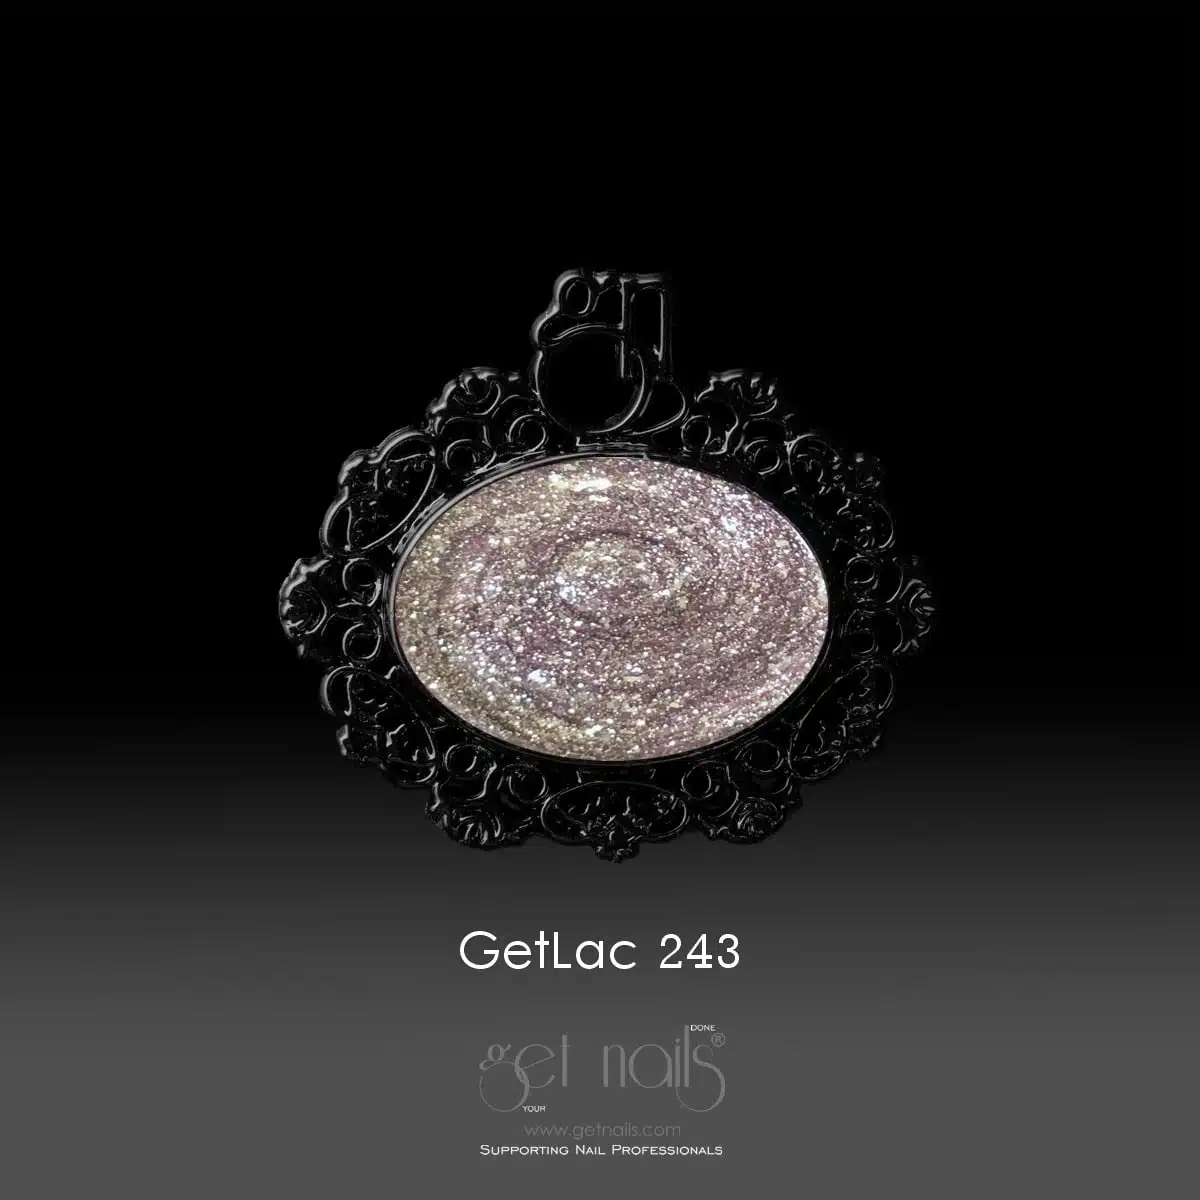 Get Nails Austria - GetLac 243 Brilliant Rose Gold 15г